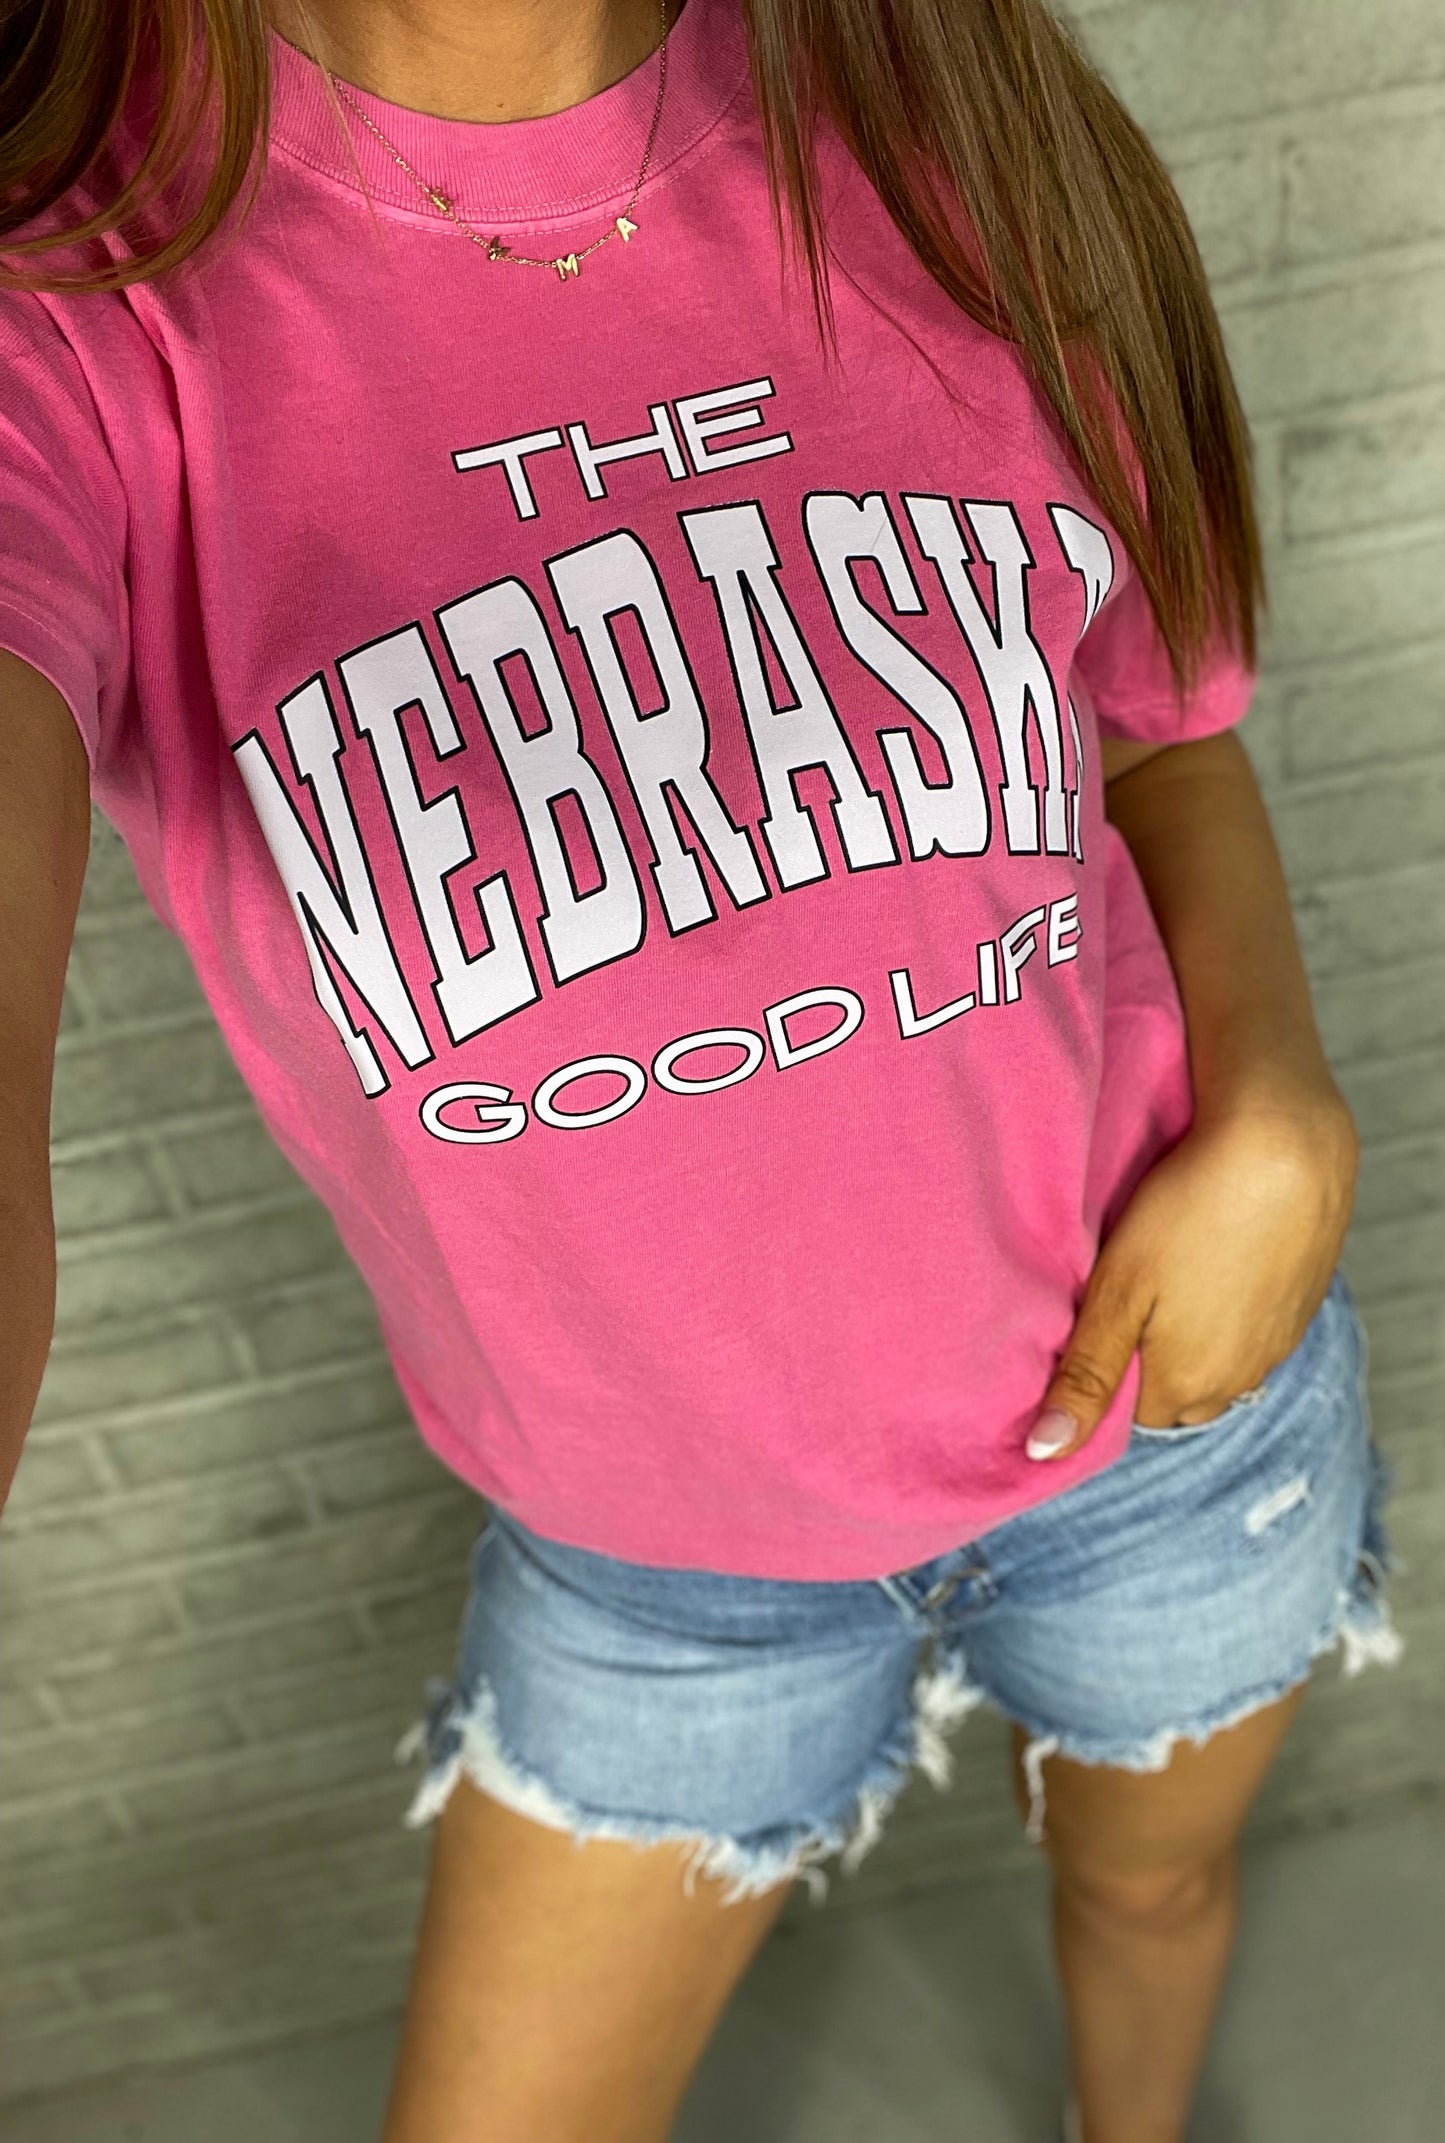 The Nebraska Good Life- Pink